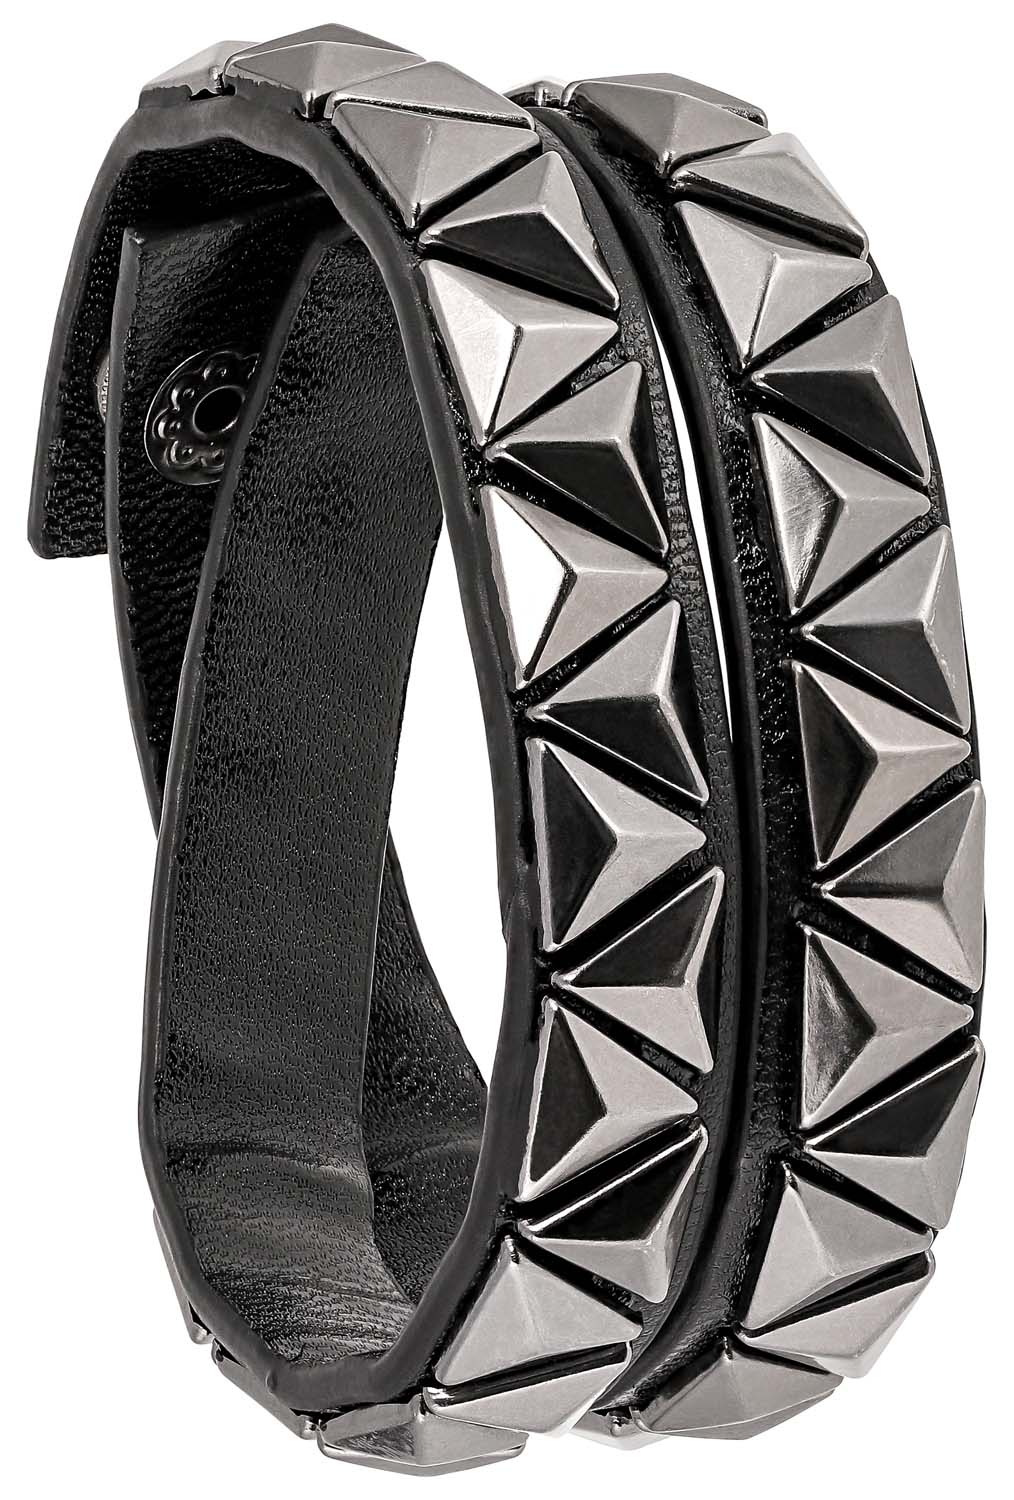 NoName Kugel Armband Rabatt 80 % Grau/Schwarz Einheitlich DAMEN Accessoires Modeschmuckset Grau 